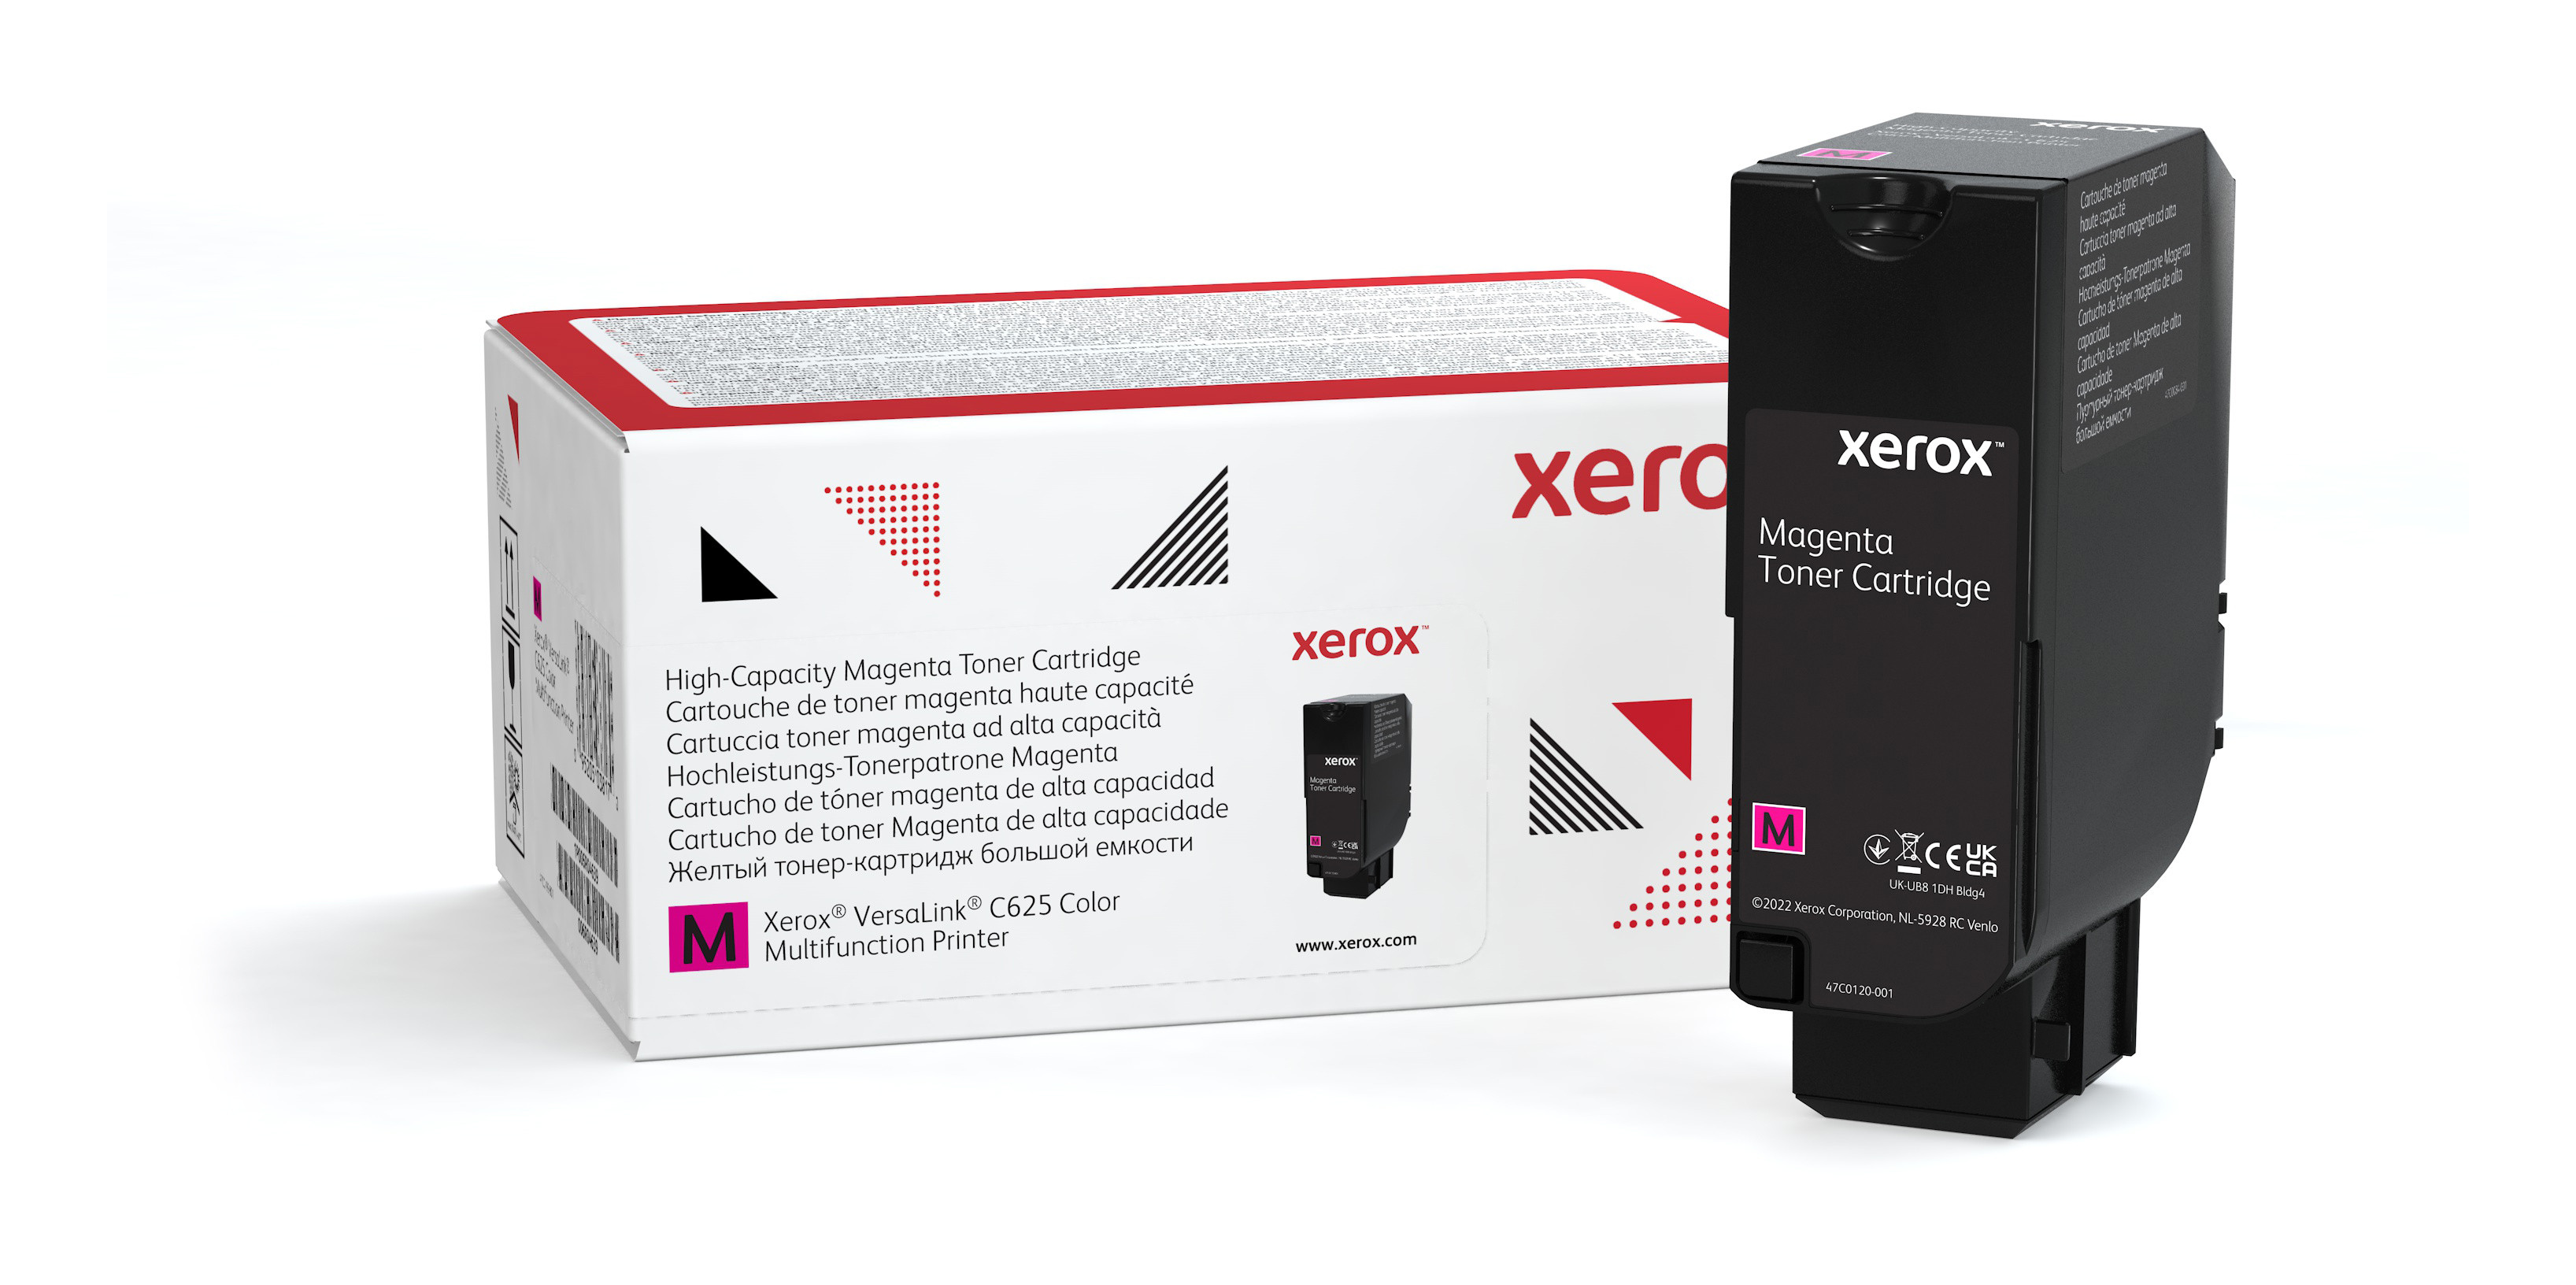 Xerox Cartuccia Toner Magenta a High Capacity da 16000 Pagine per Stampante Multifunzione a Colori VersaLink C625